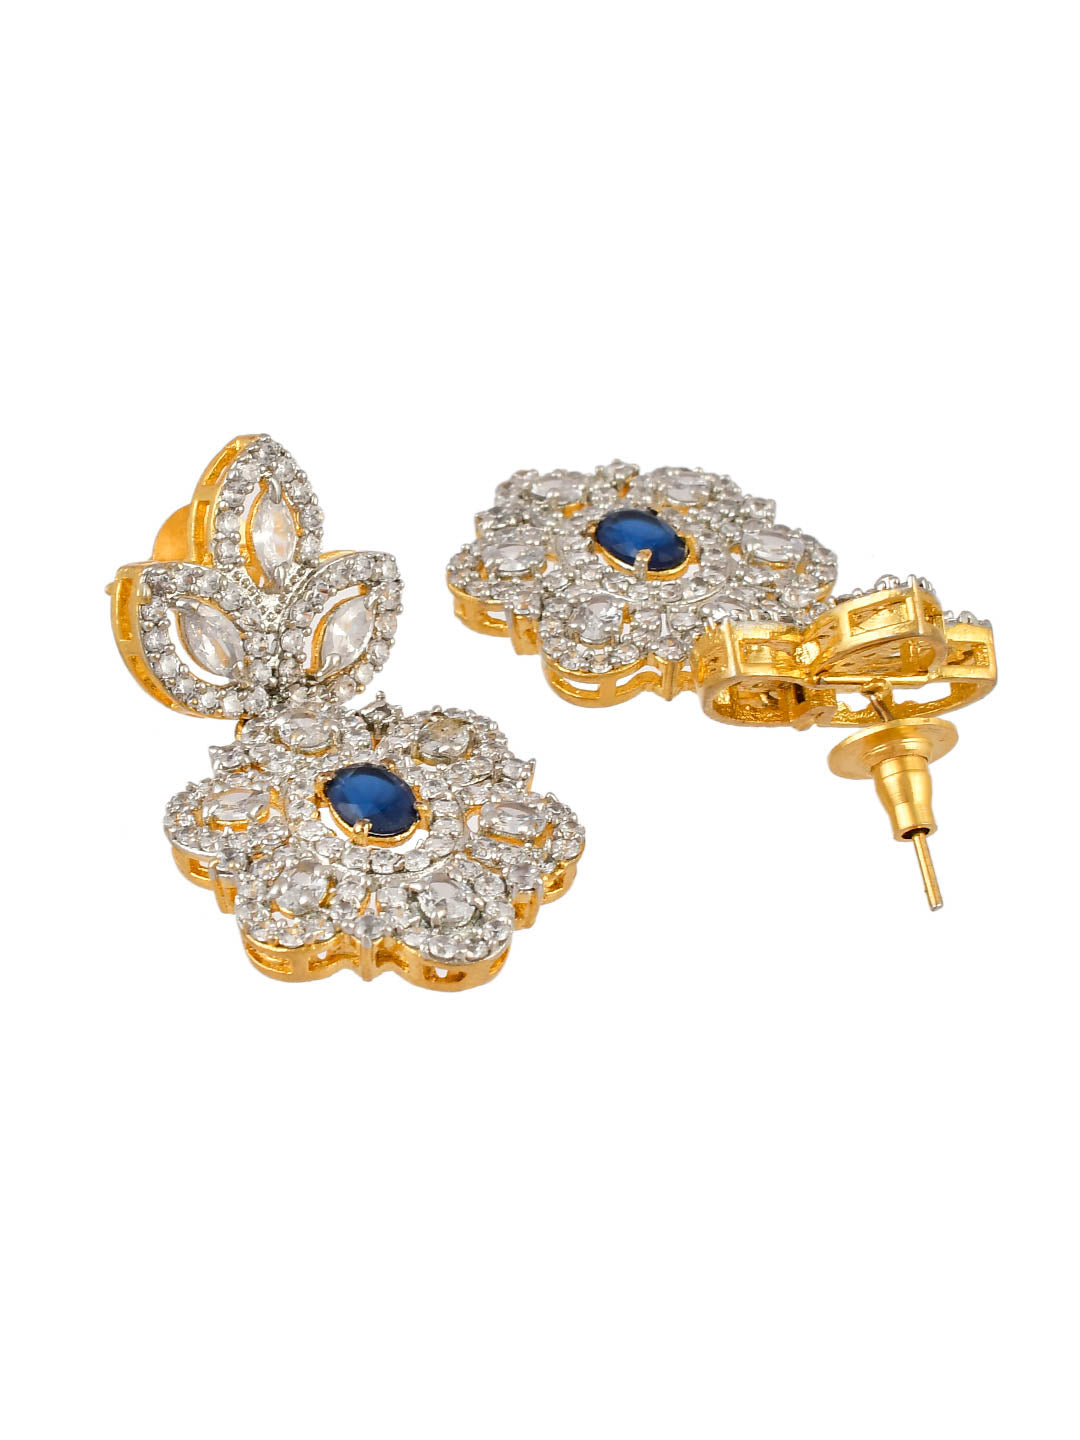 Sapphire Blue Ad Long Jewellery Set